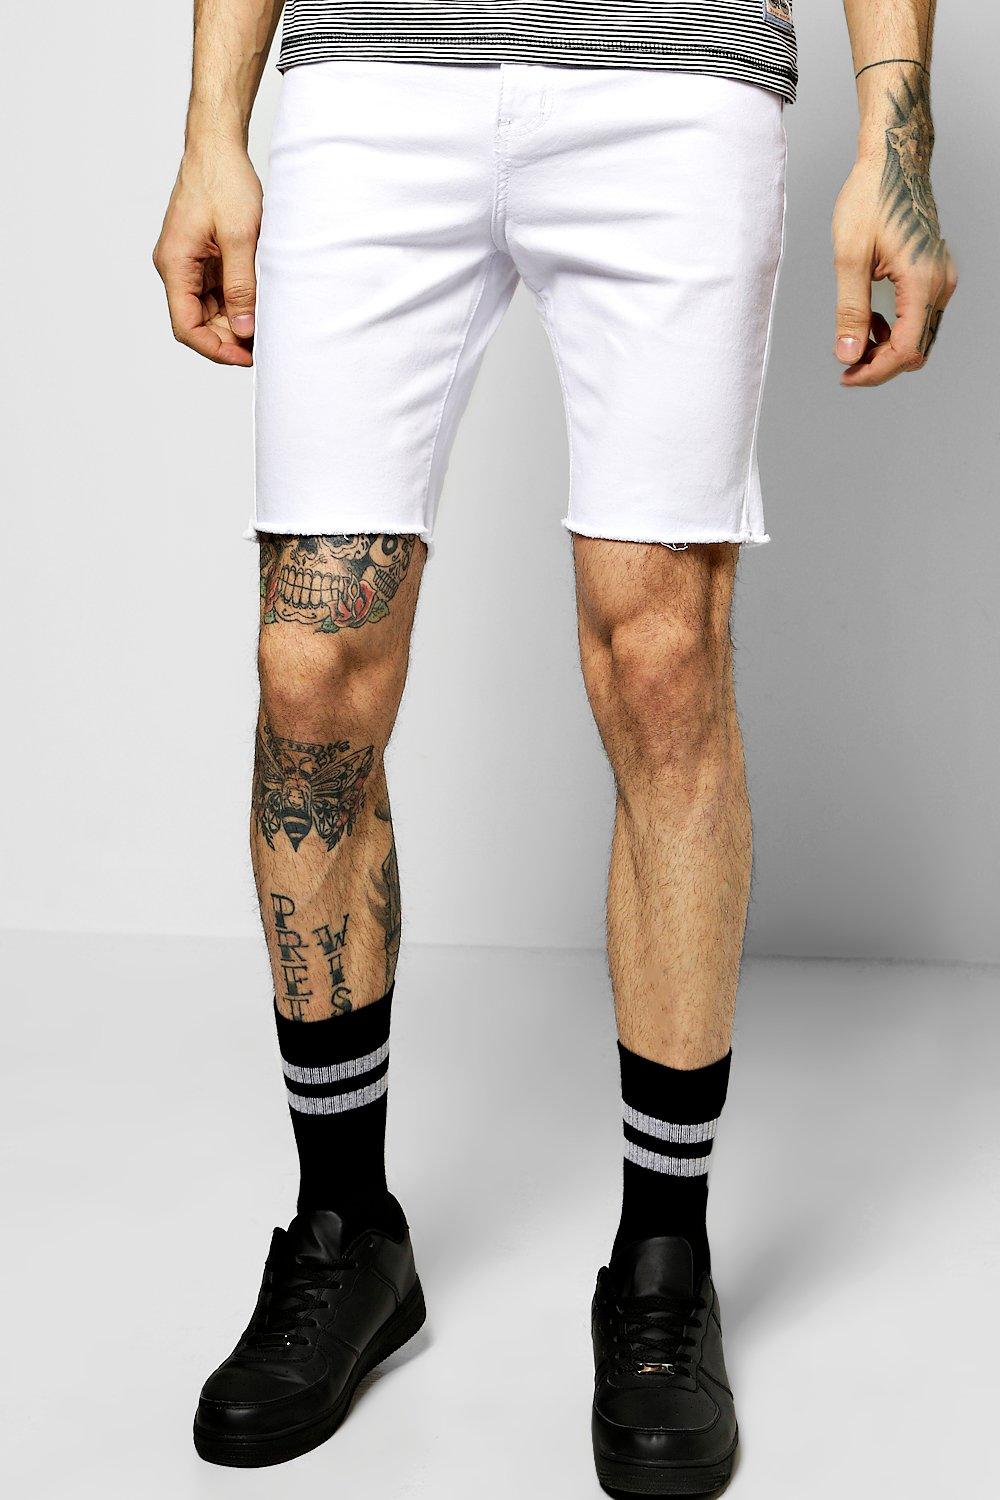 white skinny jean shorts